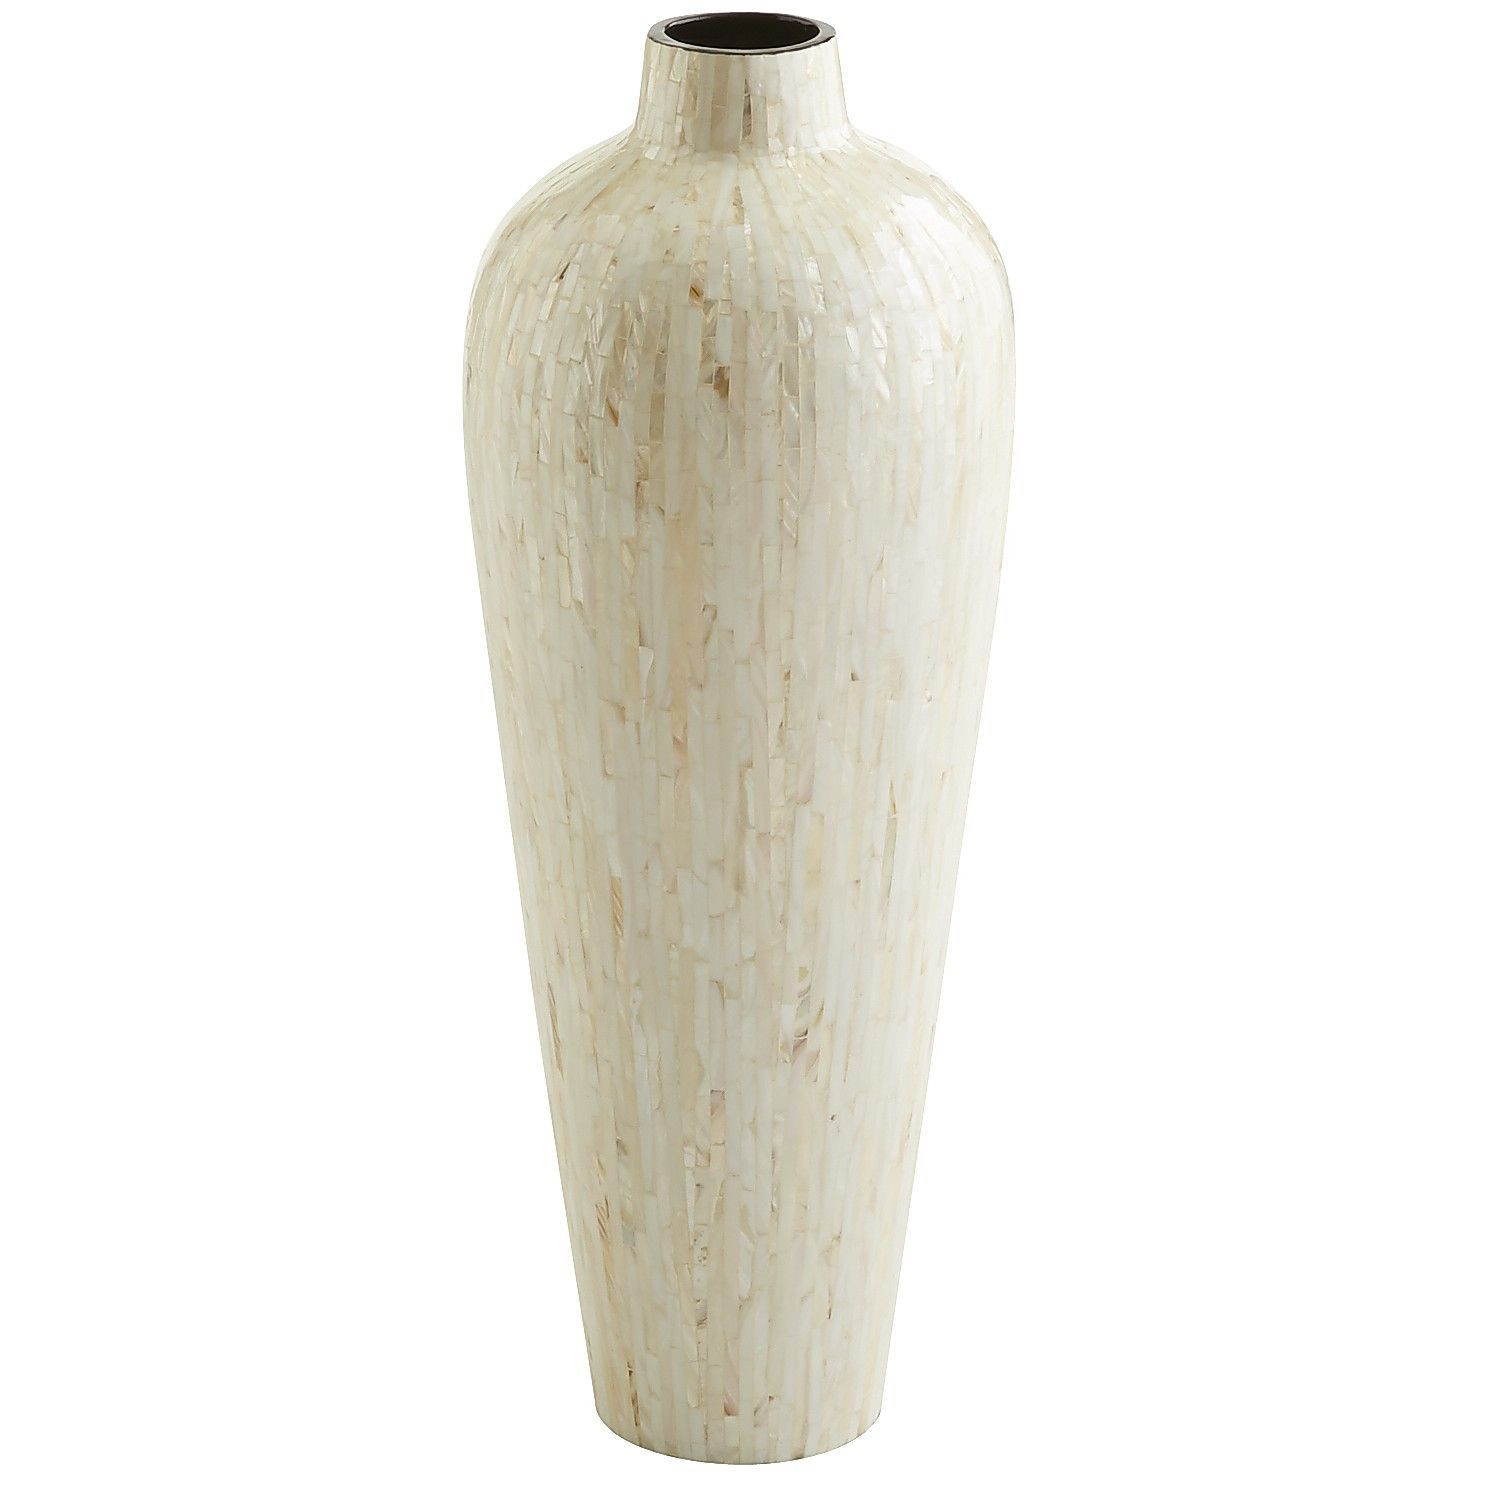 11 Famous Large Bamboo Floor Vases 2024 free download large bamboo floor vases of ivory mother of pearl floor vase decor vases pinterest inside ivory mother of pearl floor vase